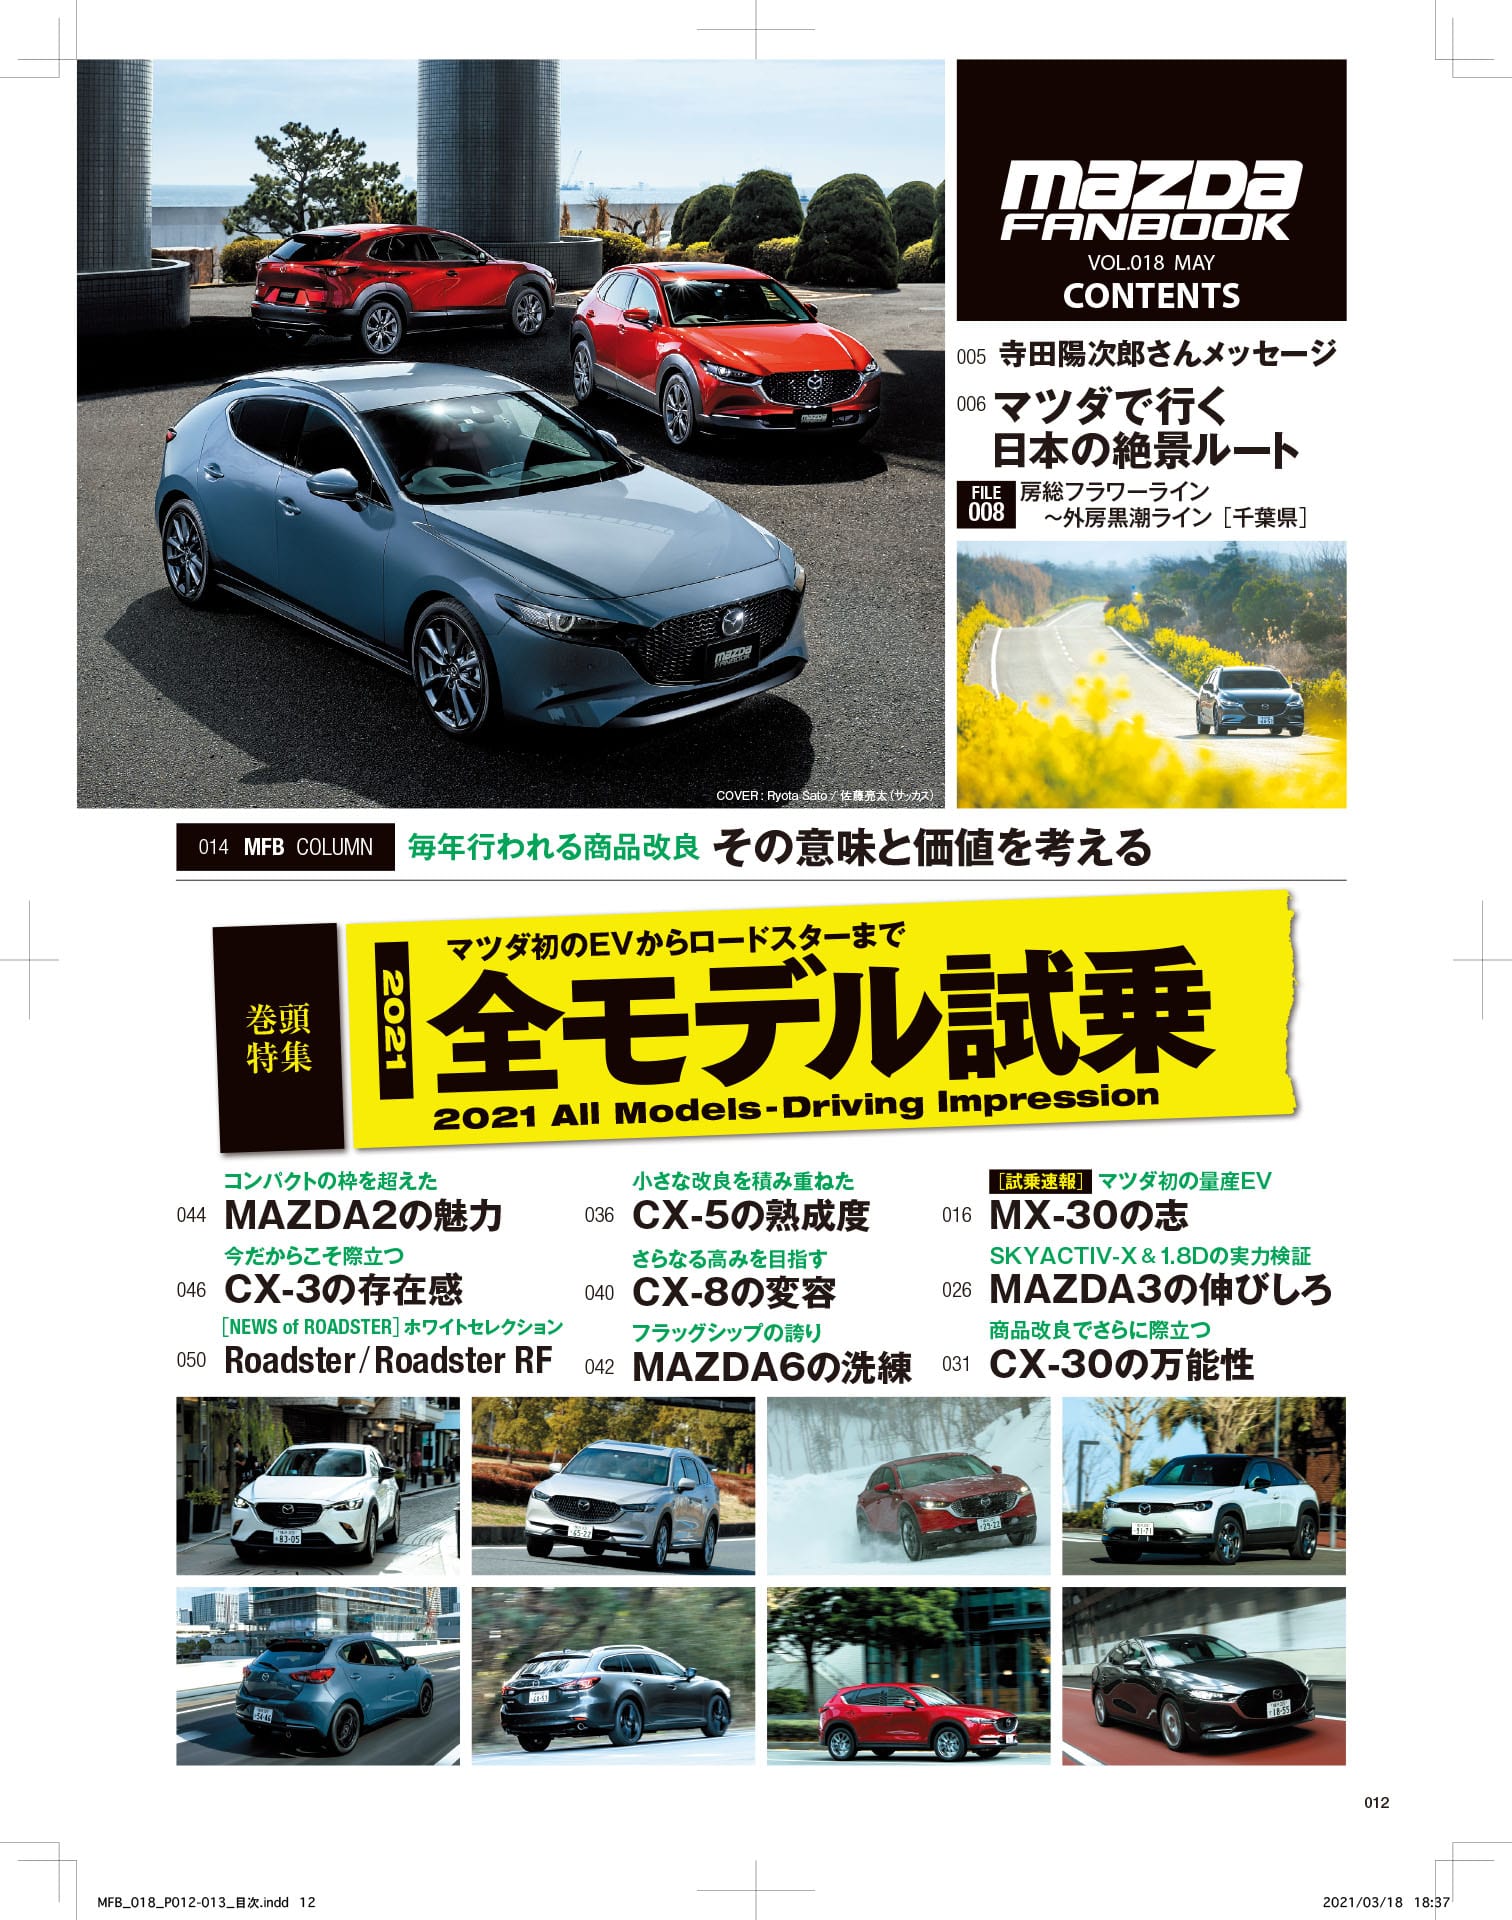 Mazda Fanbook マツダ ファンブック Vol 18 芸文社カタログサイト